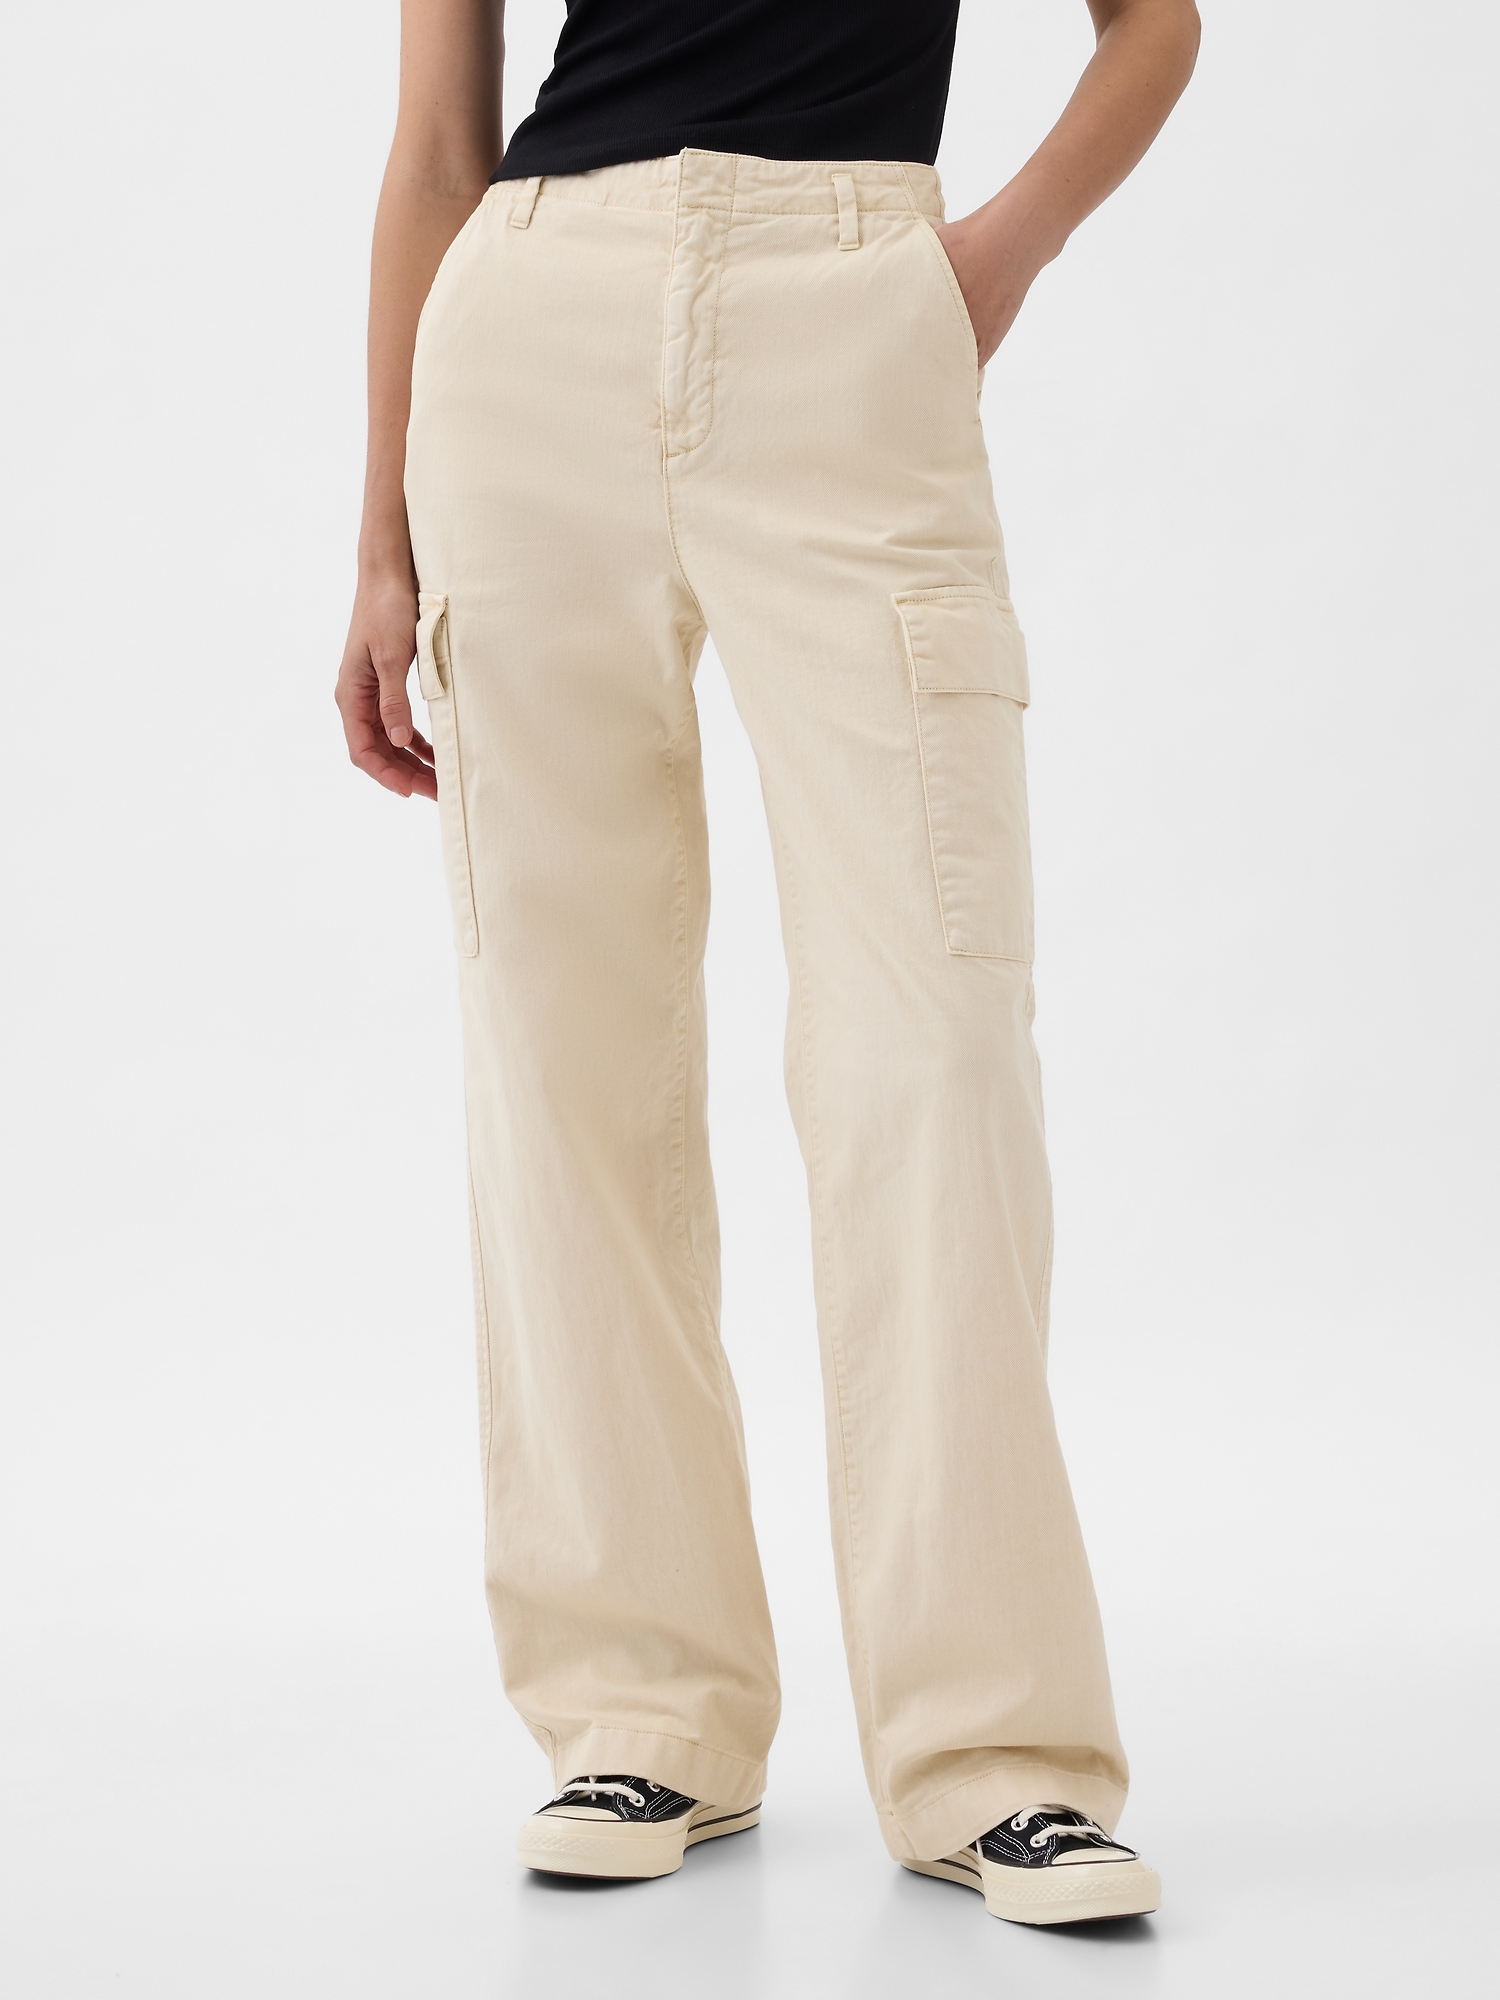 fartey Cargo Pants for Men Plus Size Multiple Pockets Baggy Comfy